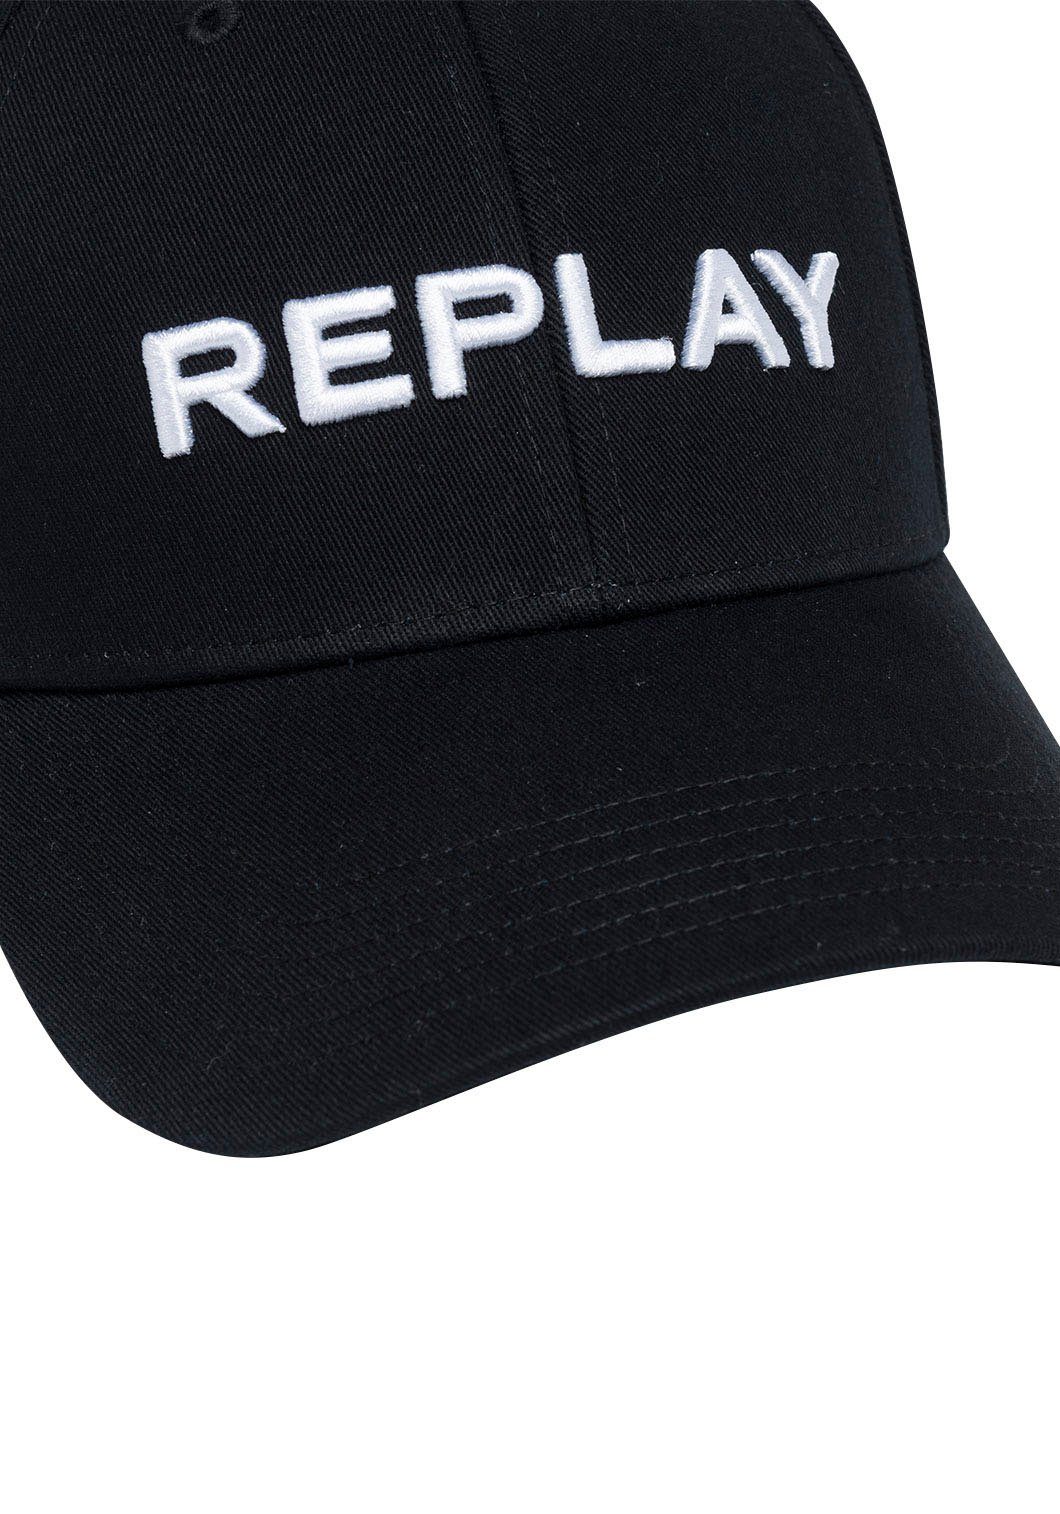 mit COMPONENTE NATURALE black Cap Logo-Stickerei Baseball Replay